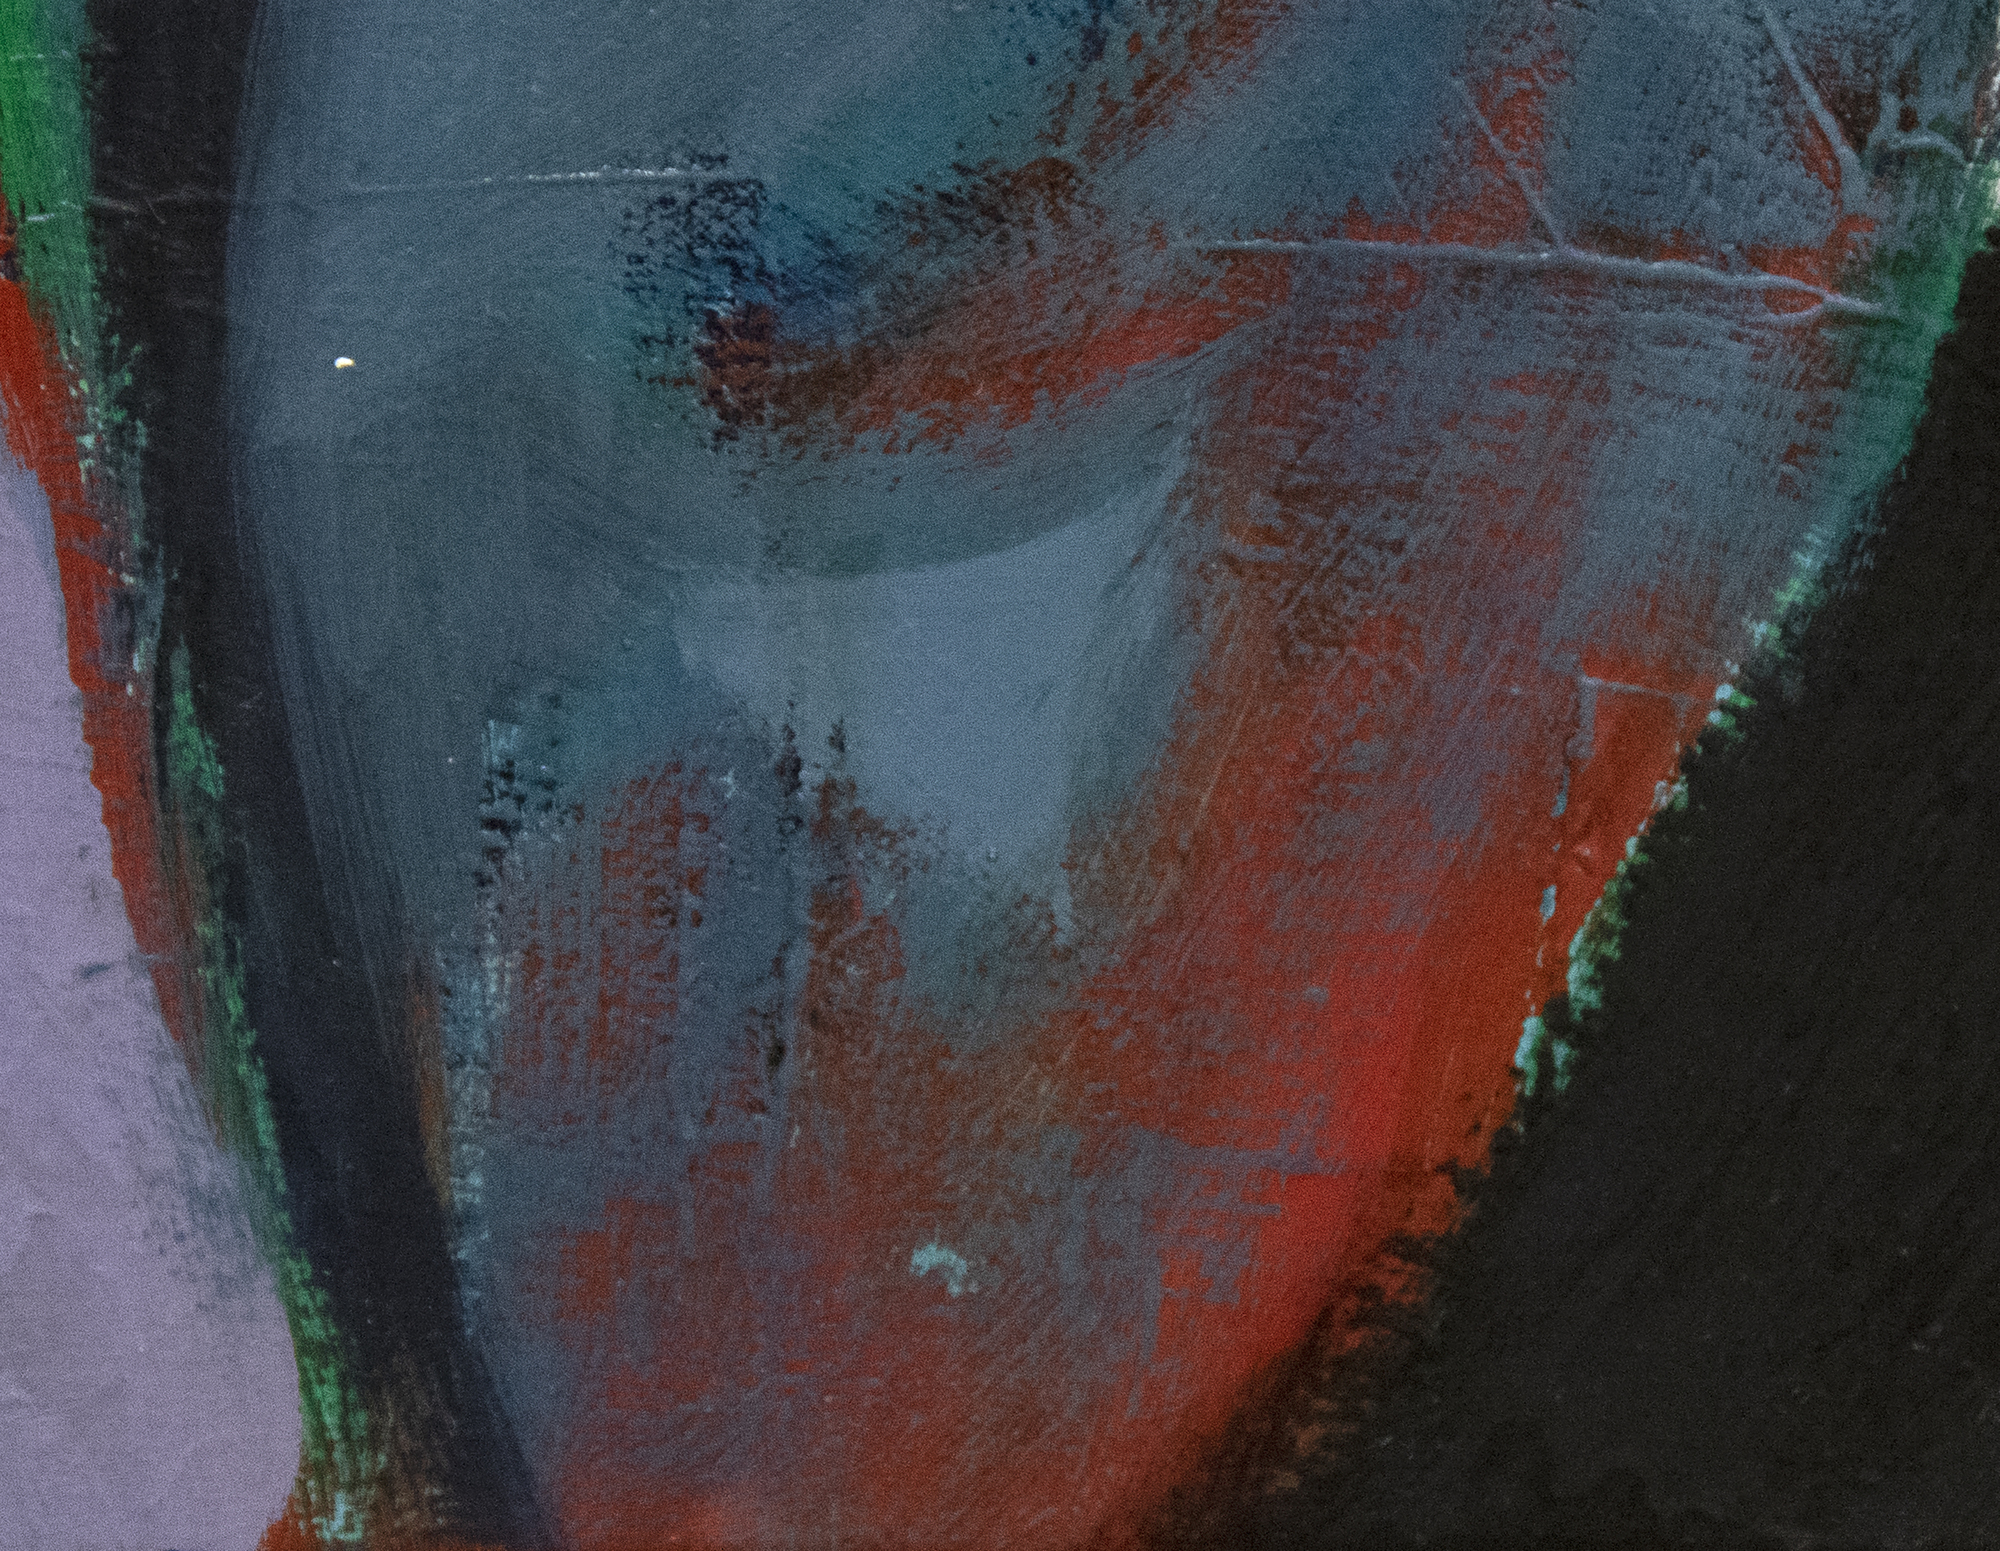 JAE KON PARK - Untitled - oil on canvas - 45 3/4 x 35 1/2 in.